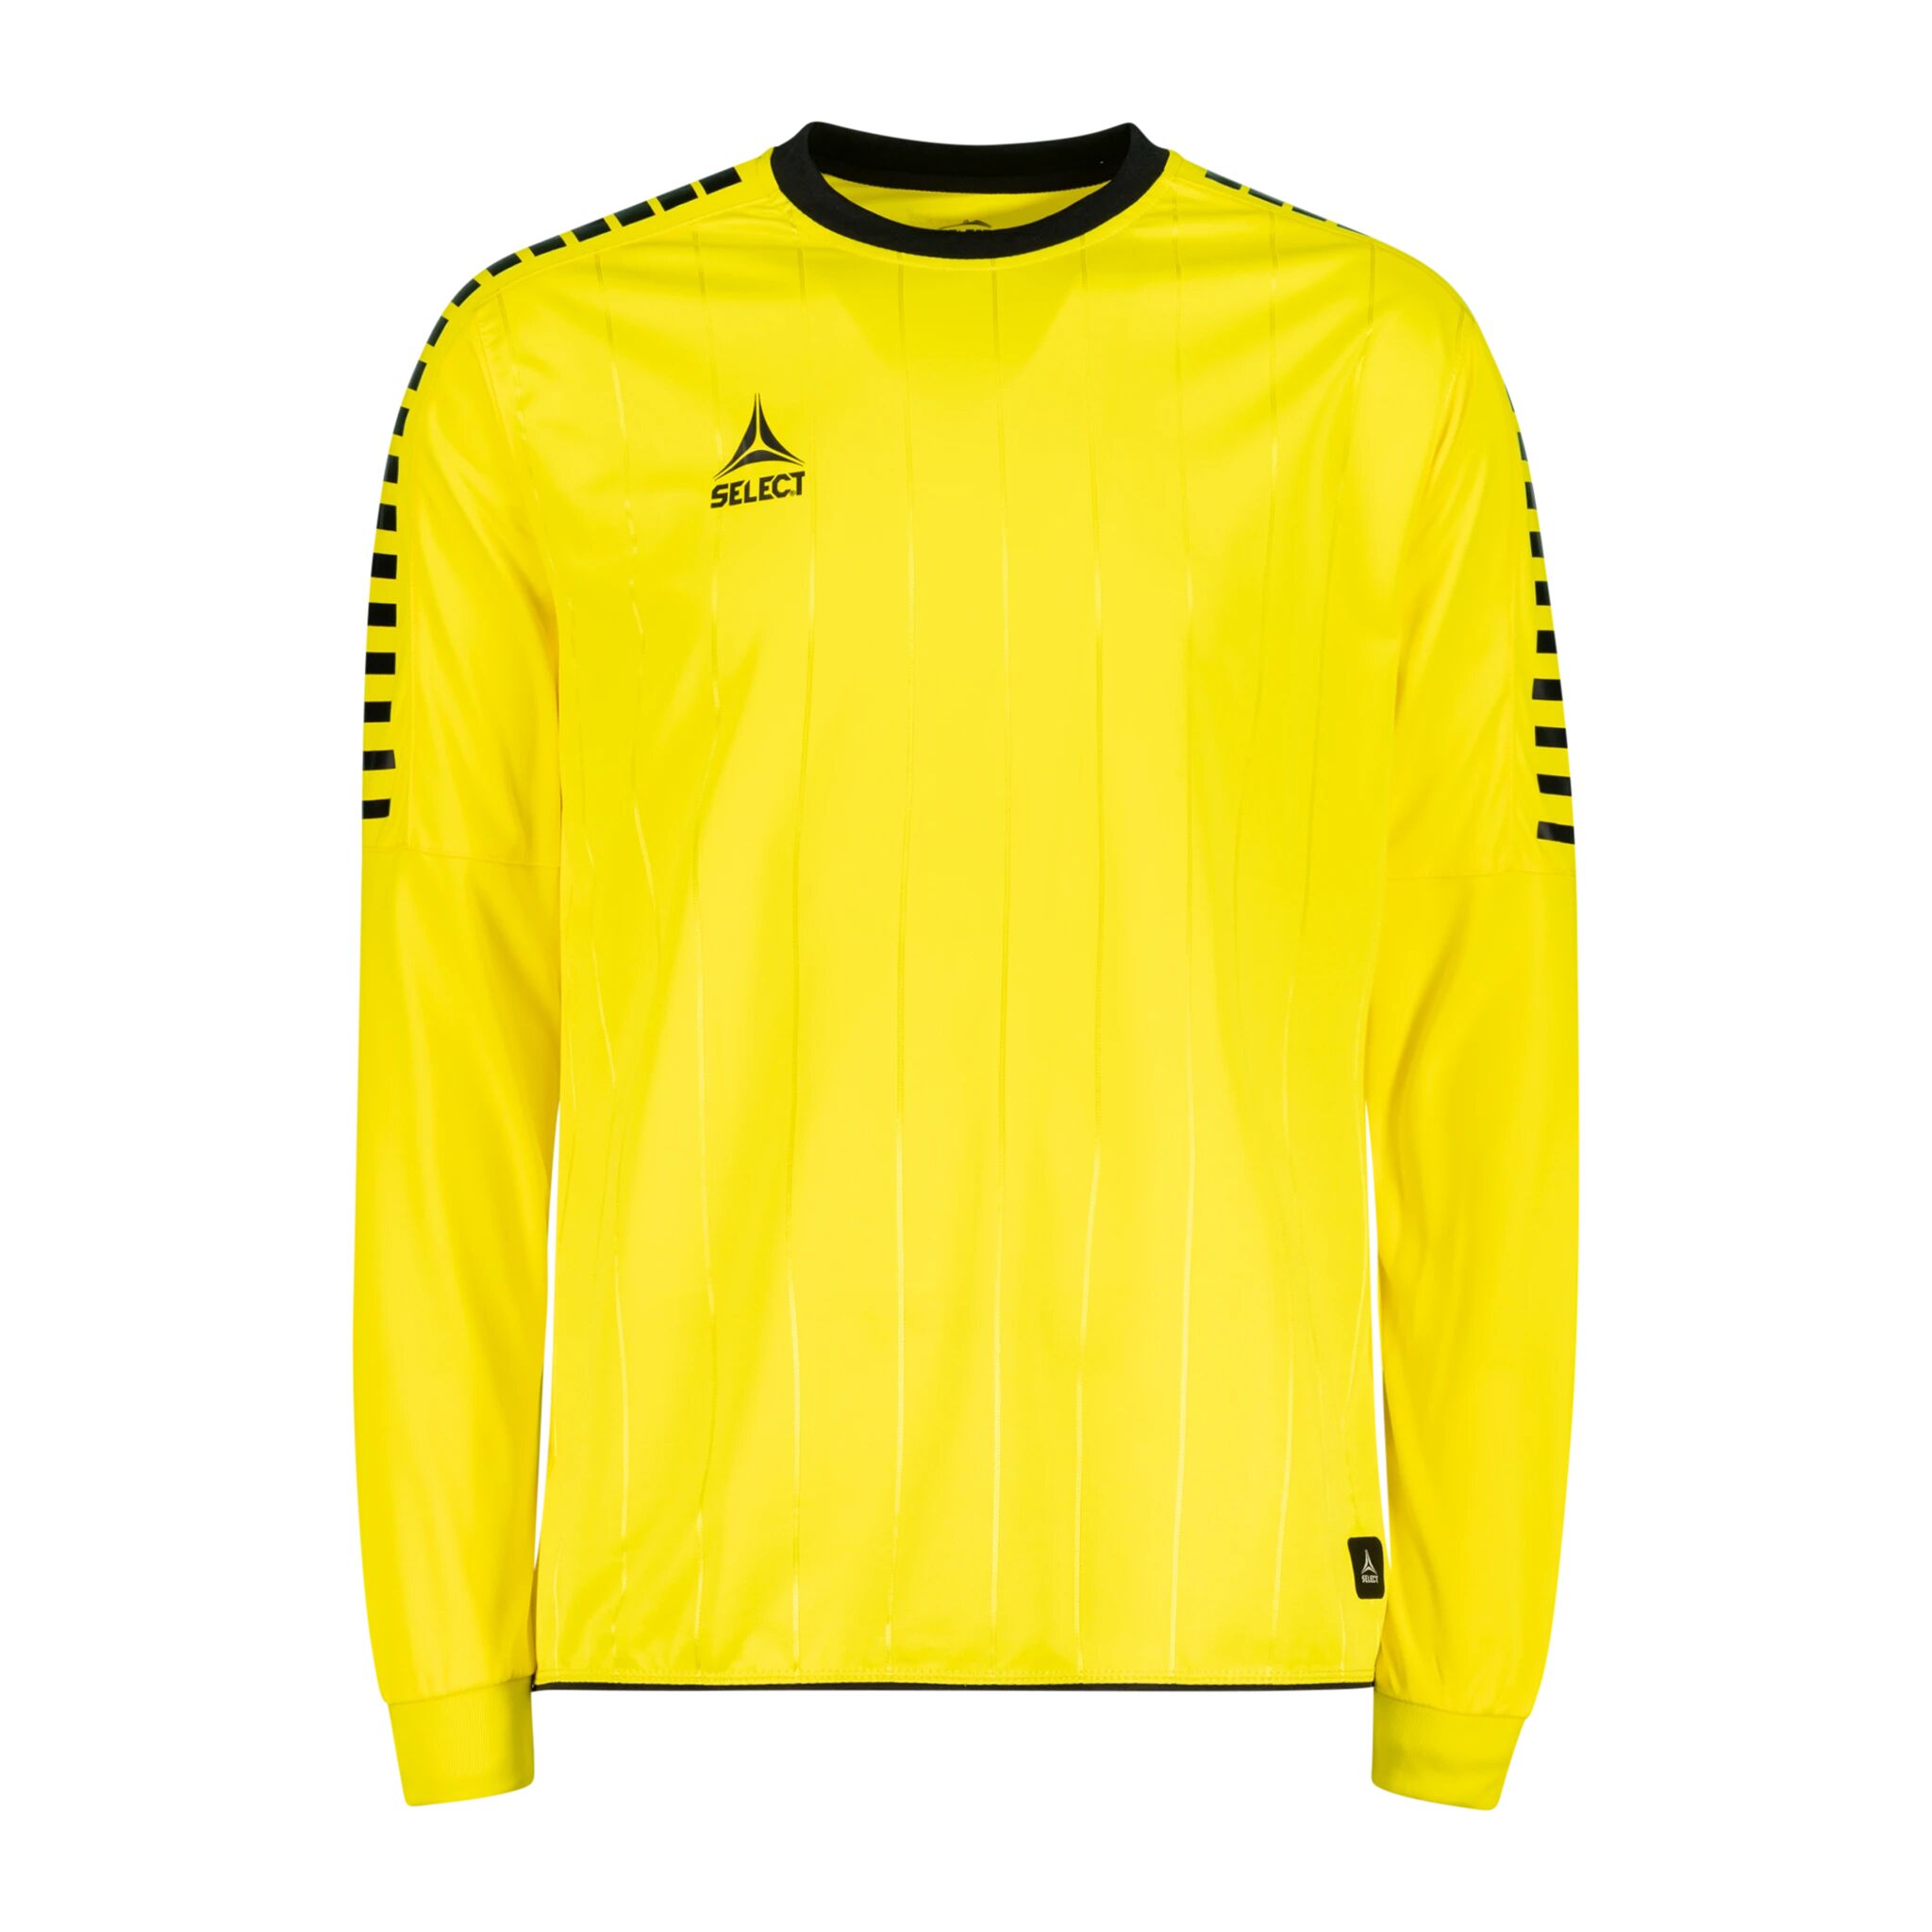 Select Player shirt L/S Argentina, fotballtrøye senior XXL Yellow/Black